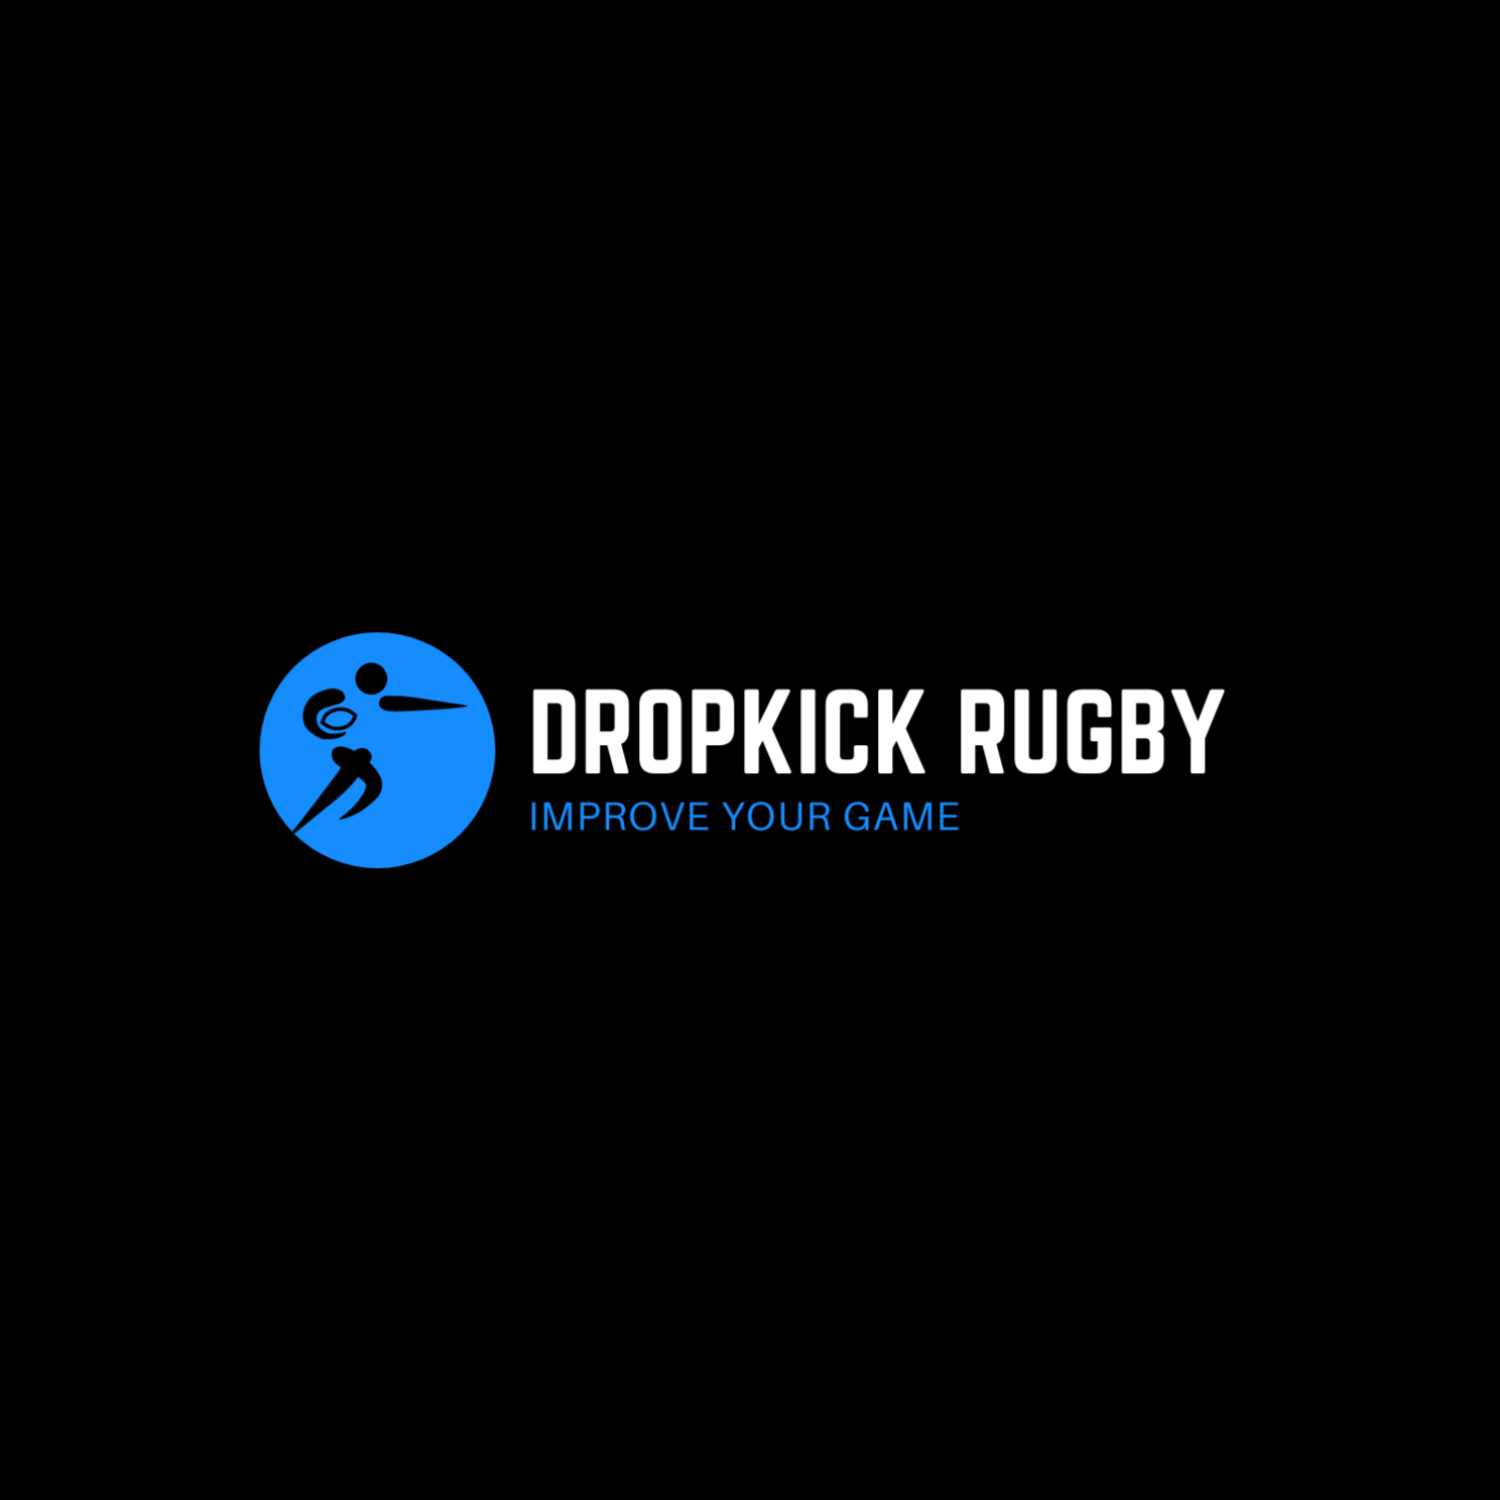 #1: John Okafor | Harsh Reality Of A Professional Rugby Academy